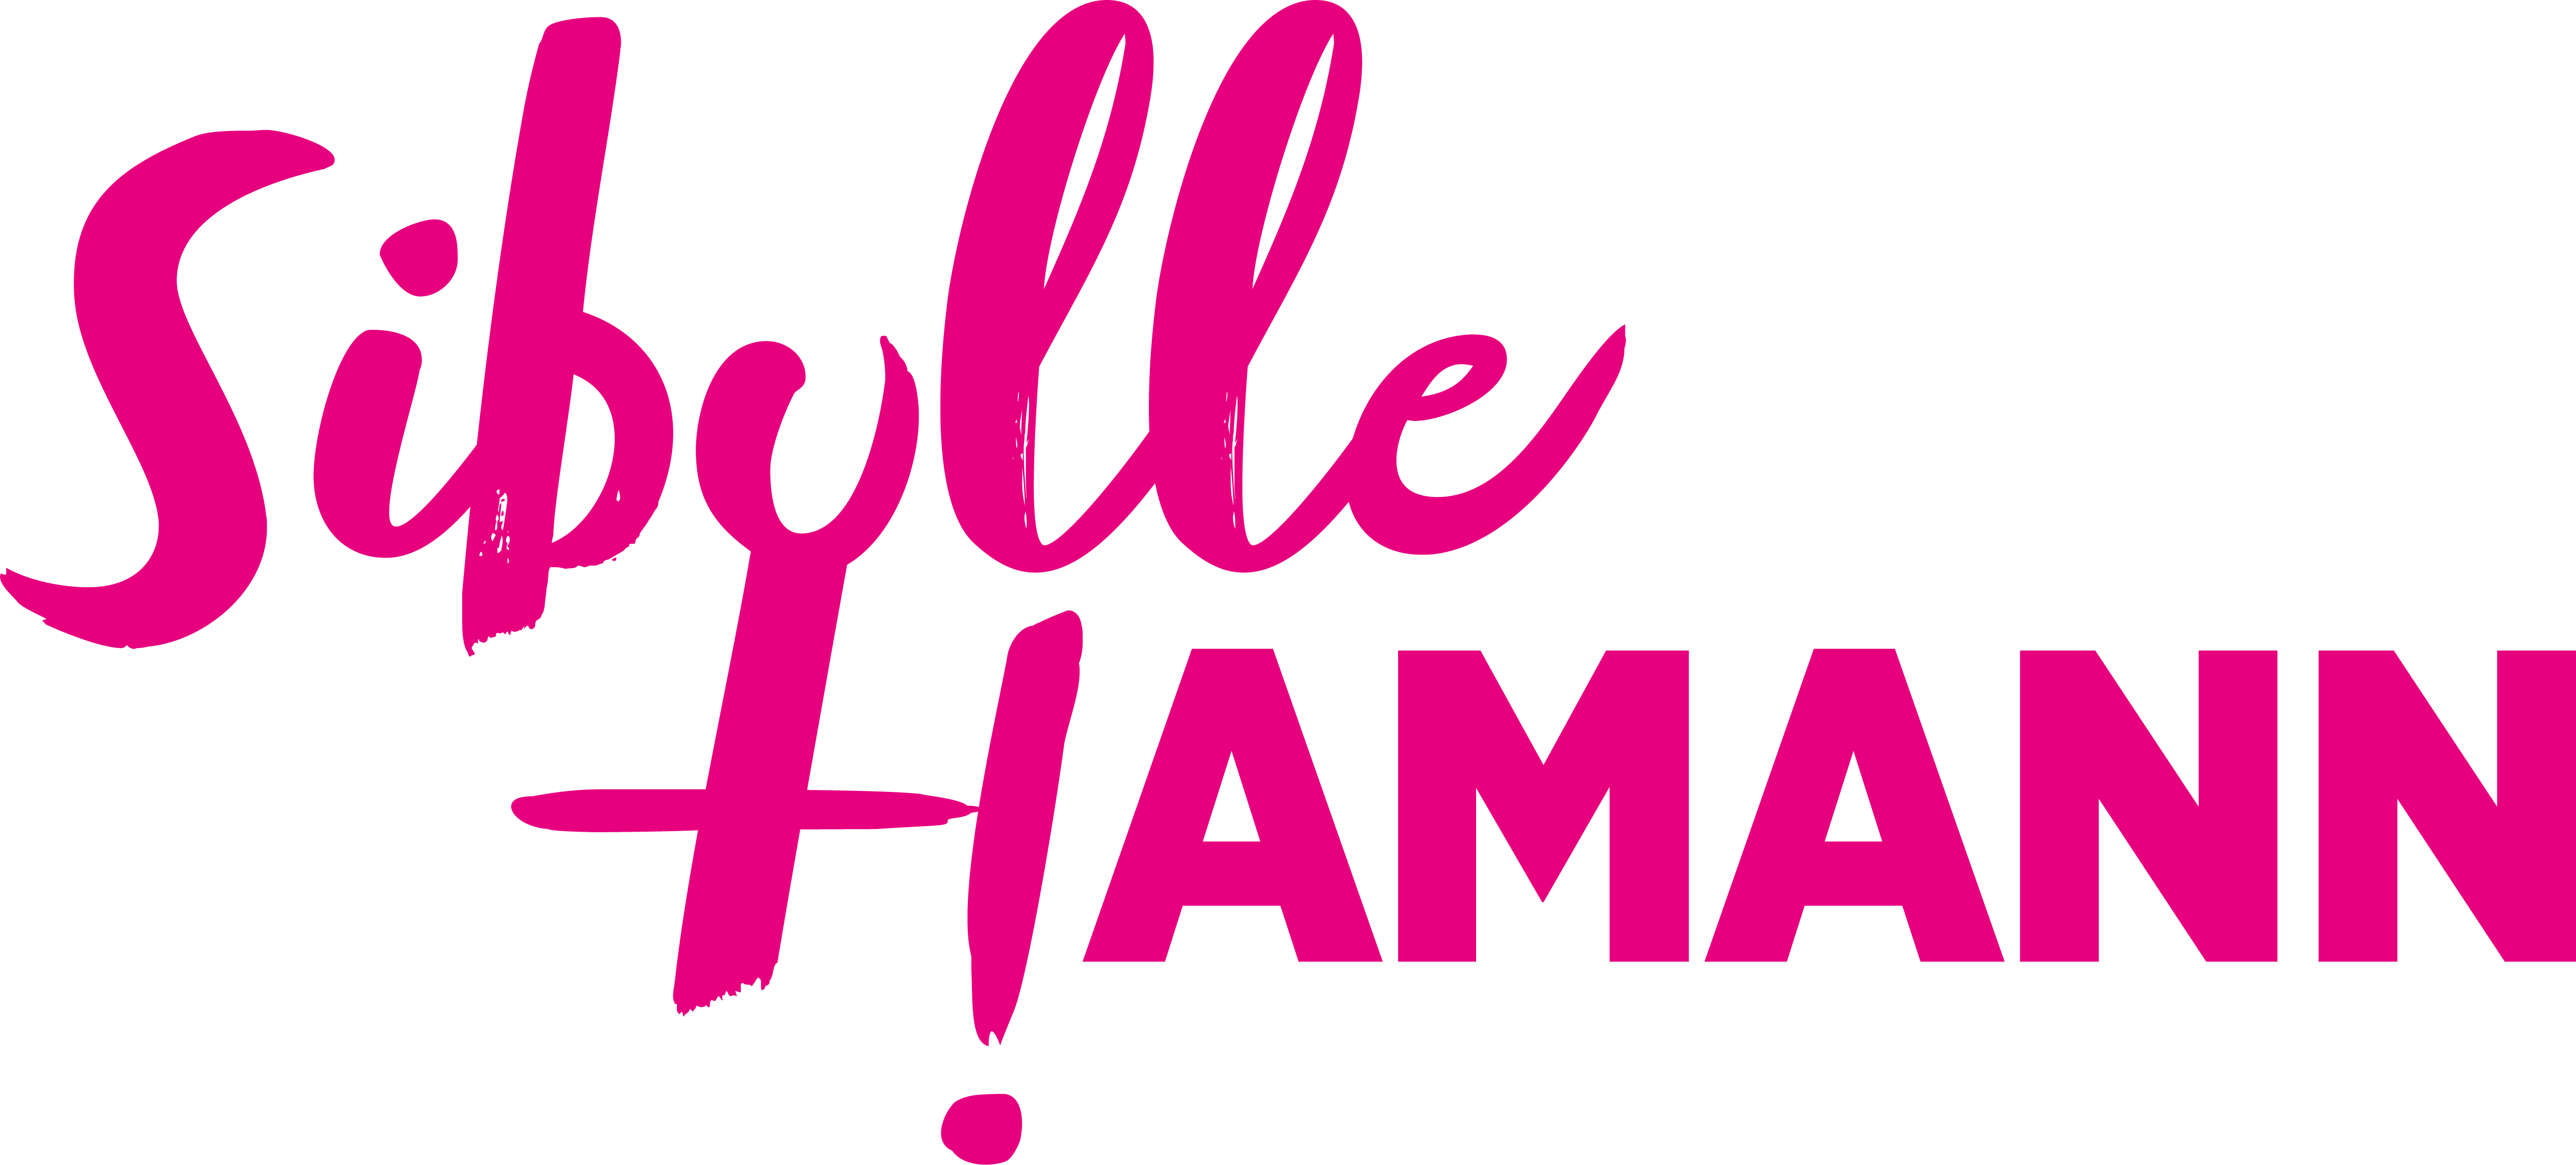 Sibylle Hamann